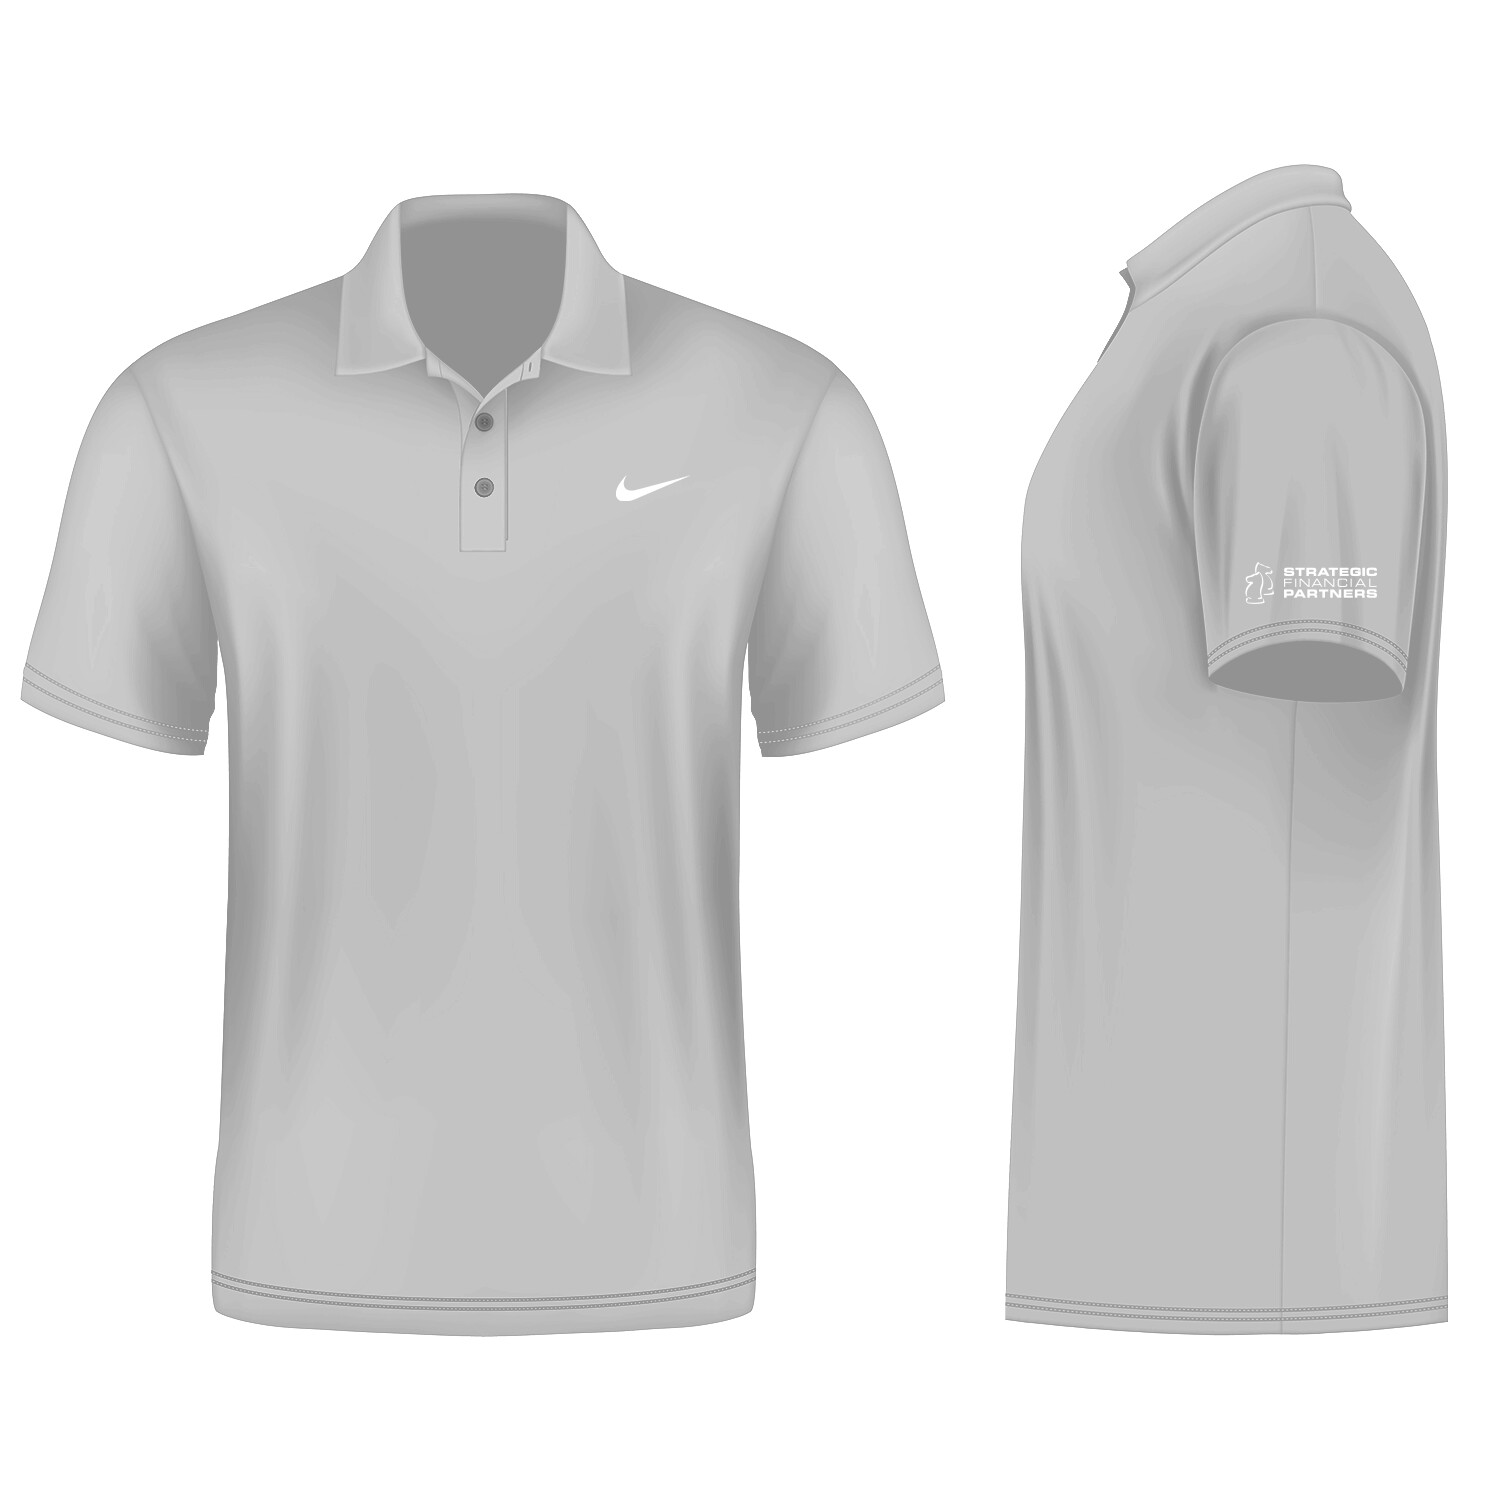 Nike Golf Shirt - Light Grey